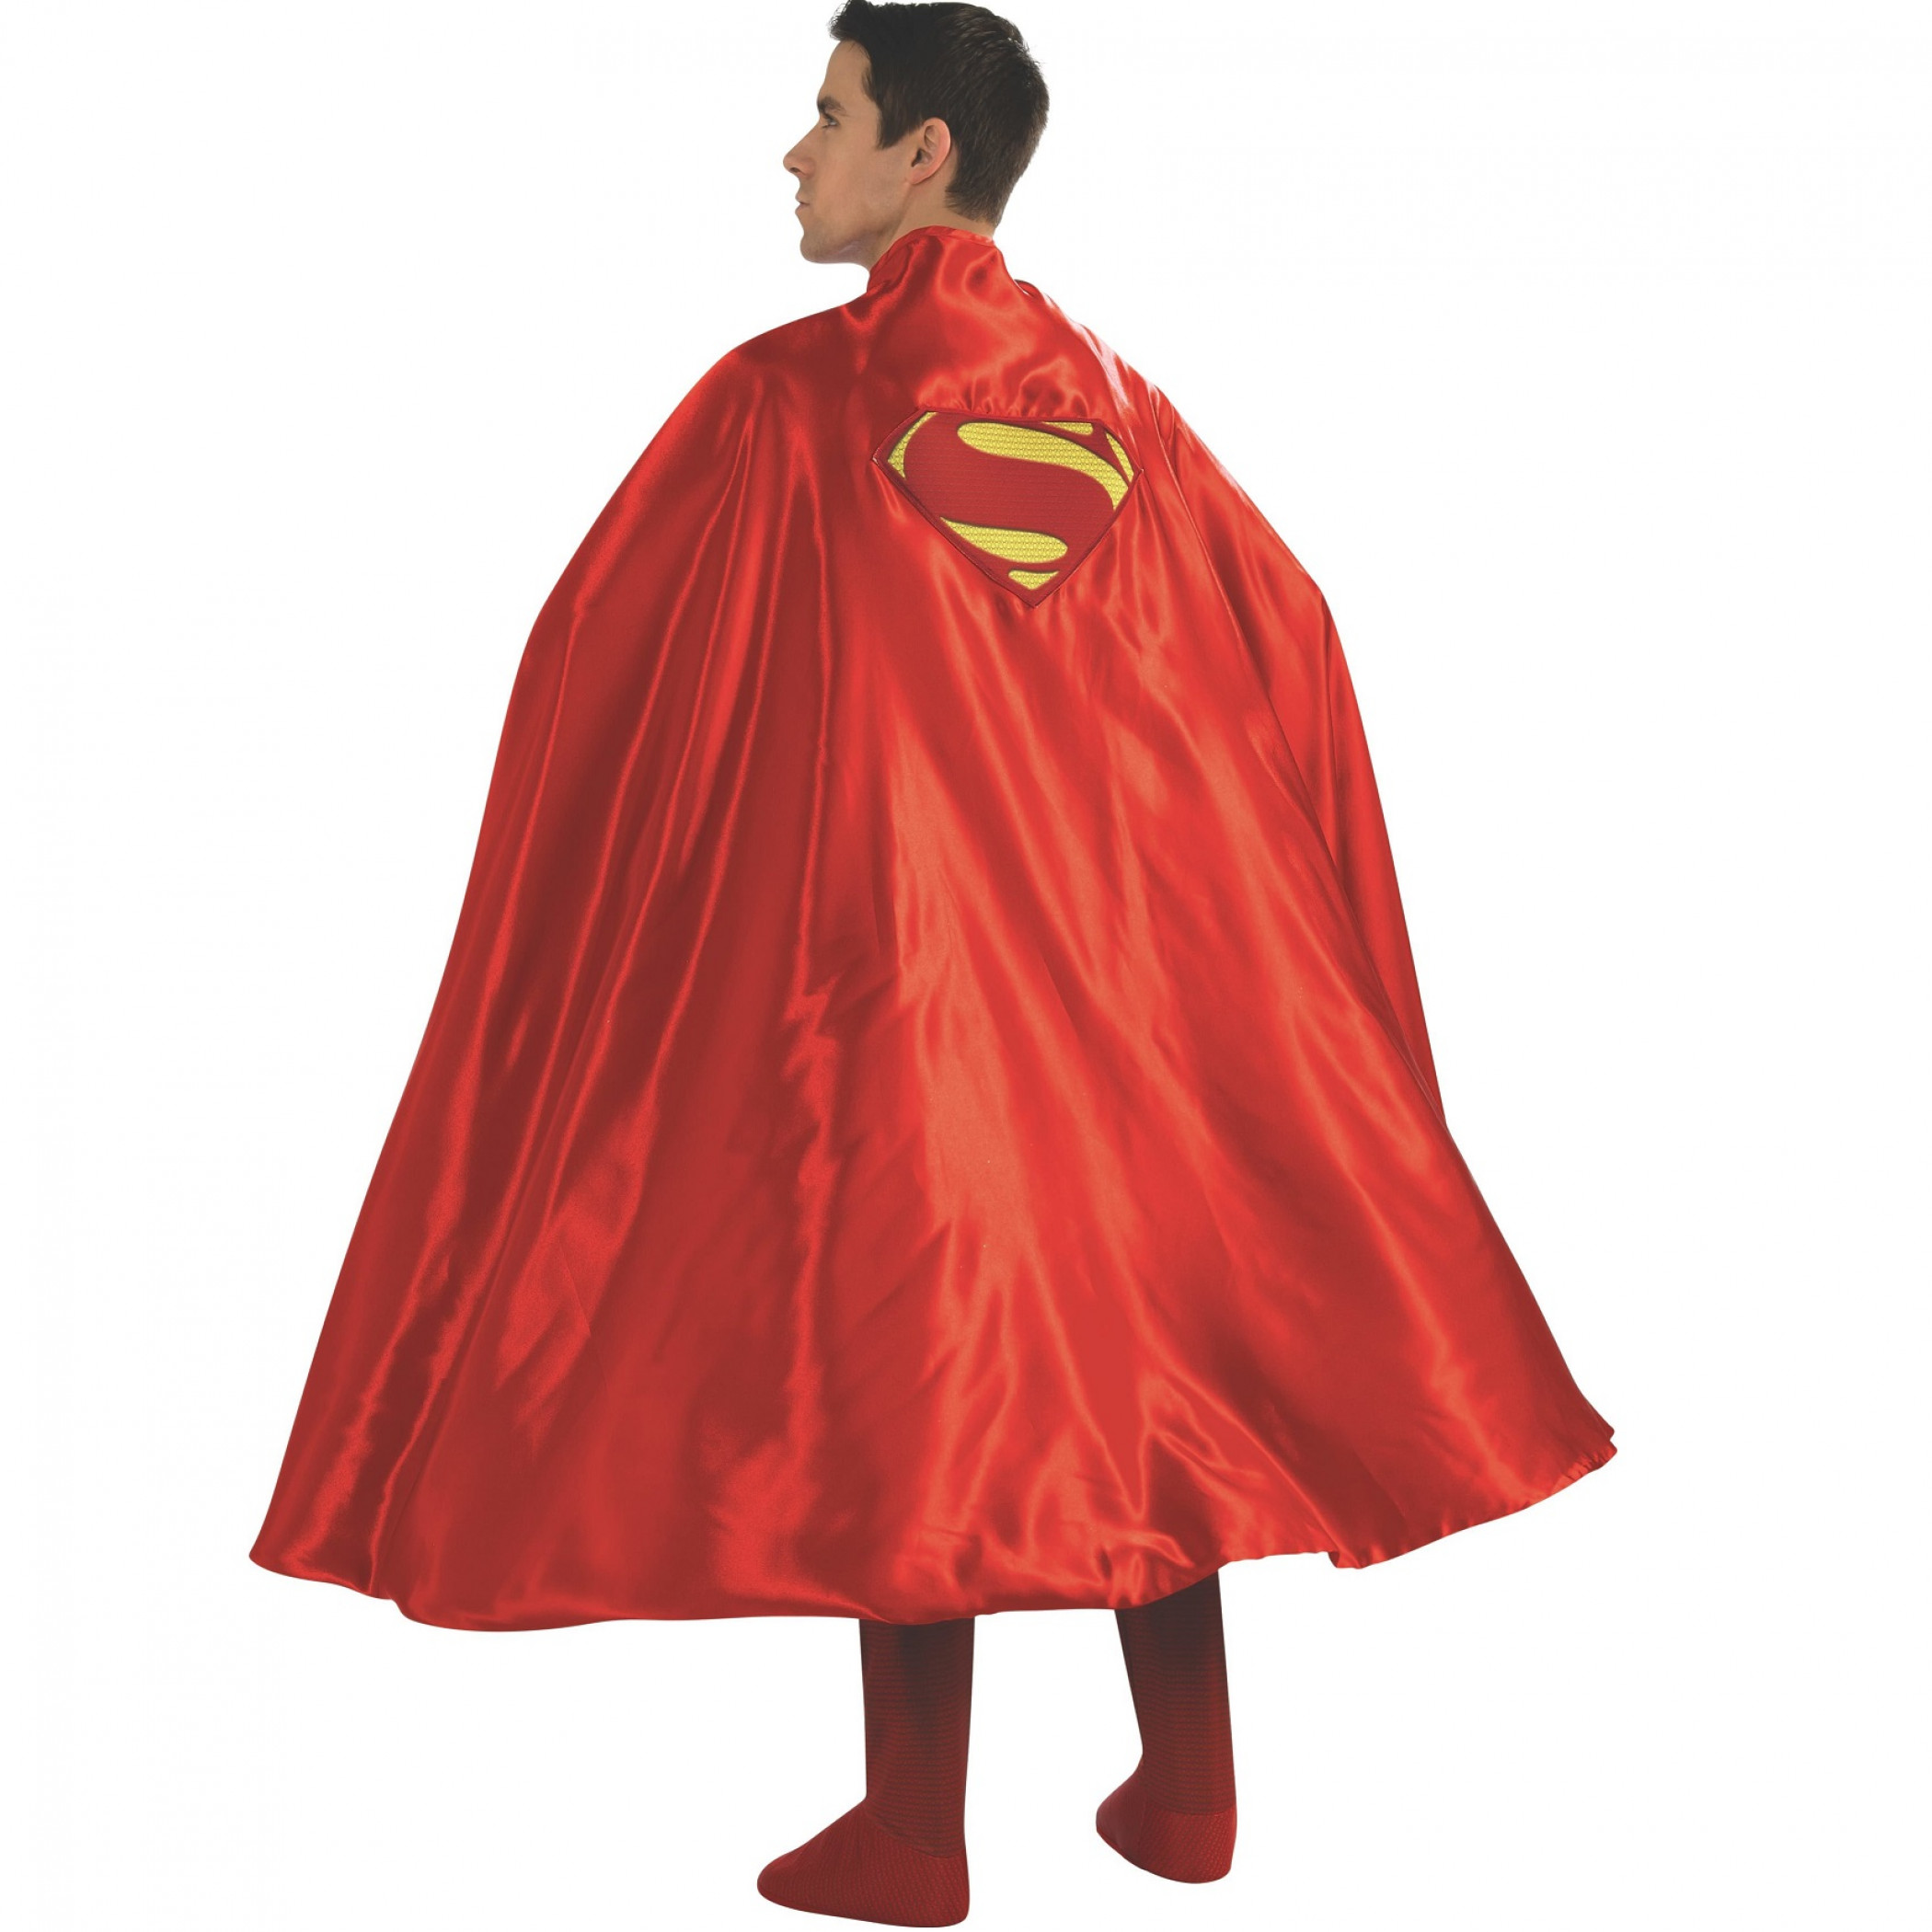 Superman Deluxe Adult Costume Cape